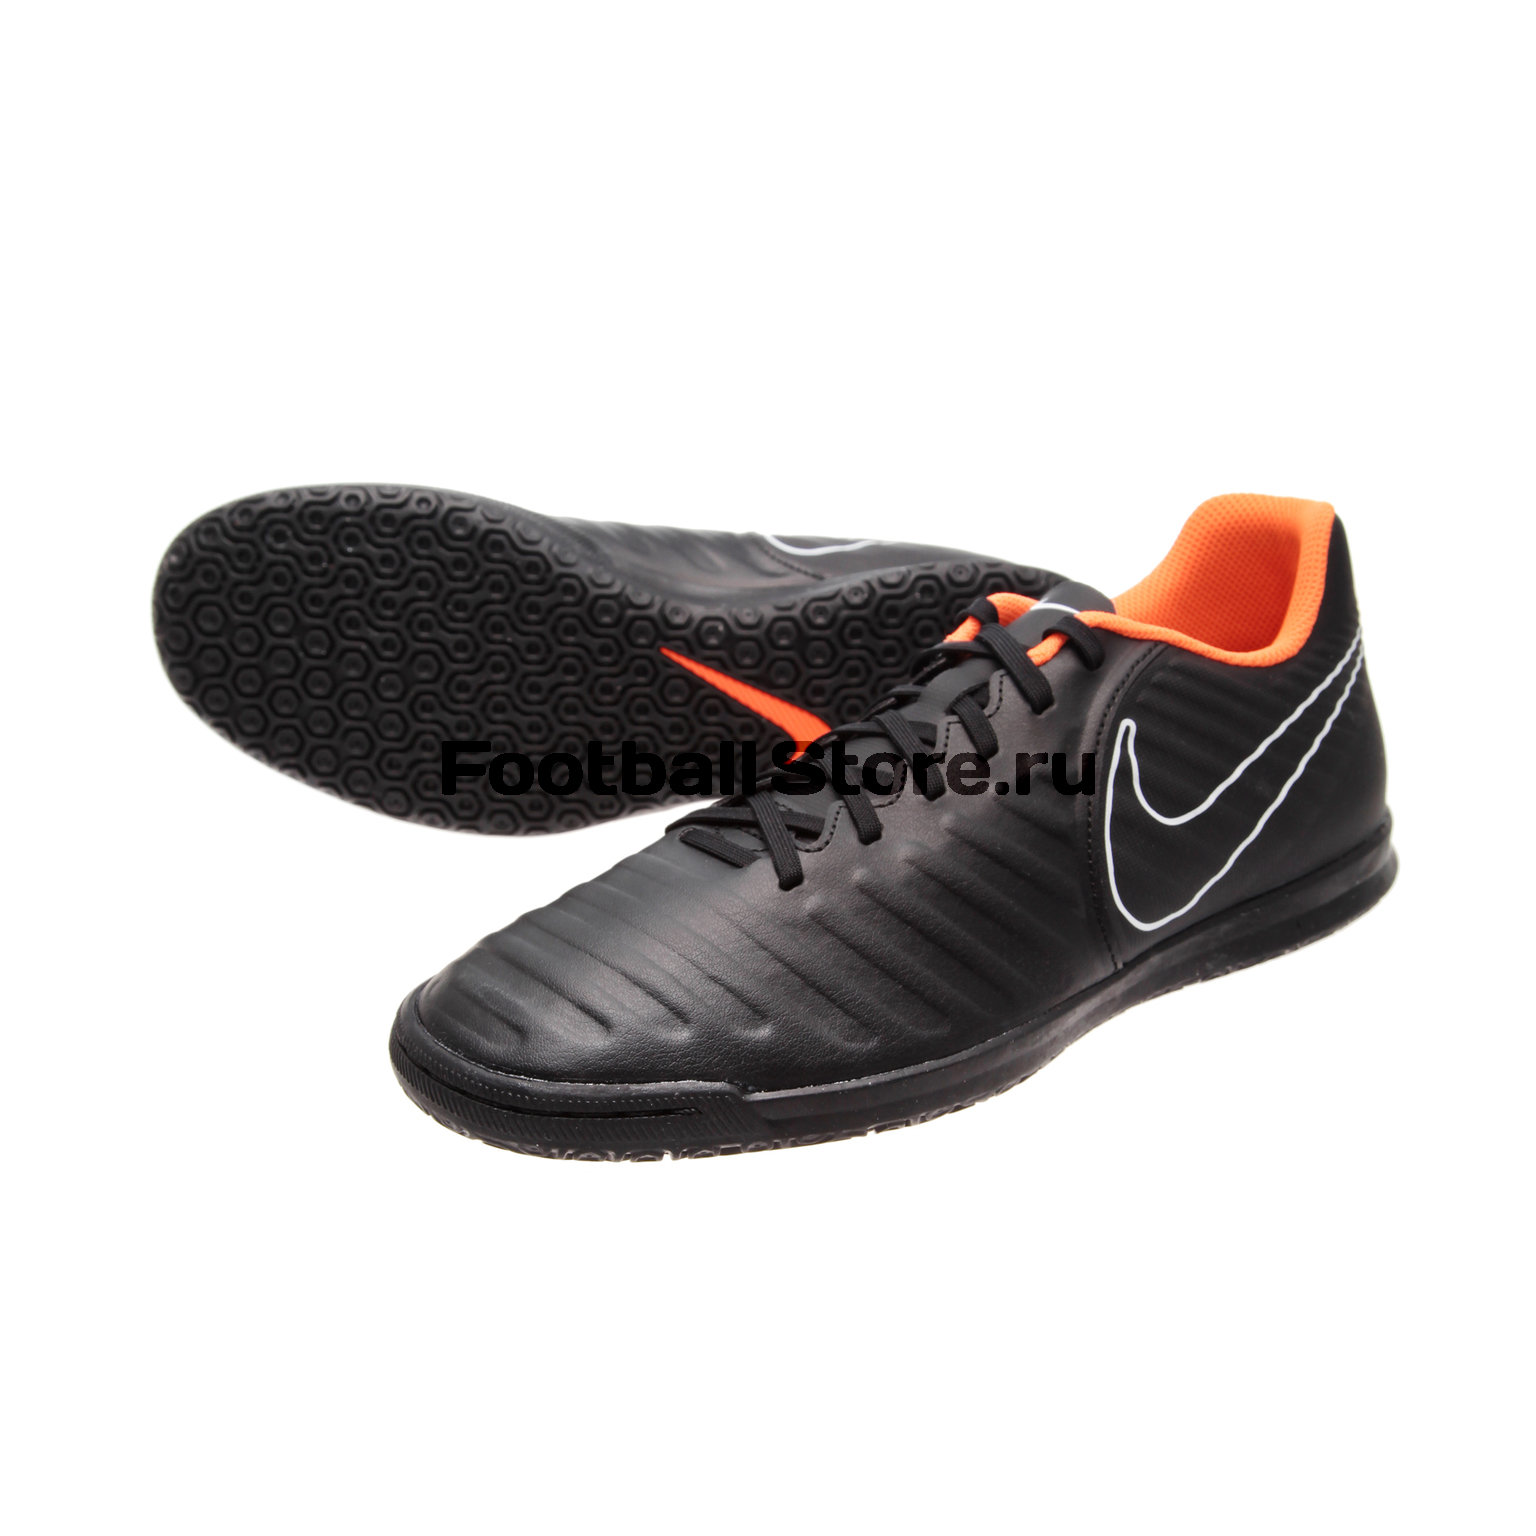 Футзалки Nike LegendX 7 Club IC AH7245-080 – купить футзалки в интернет  магазине footballstore, цена, фото